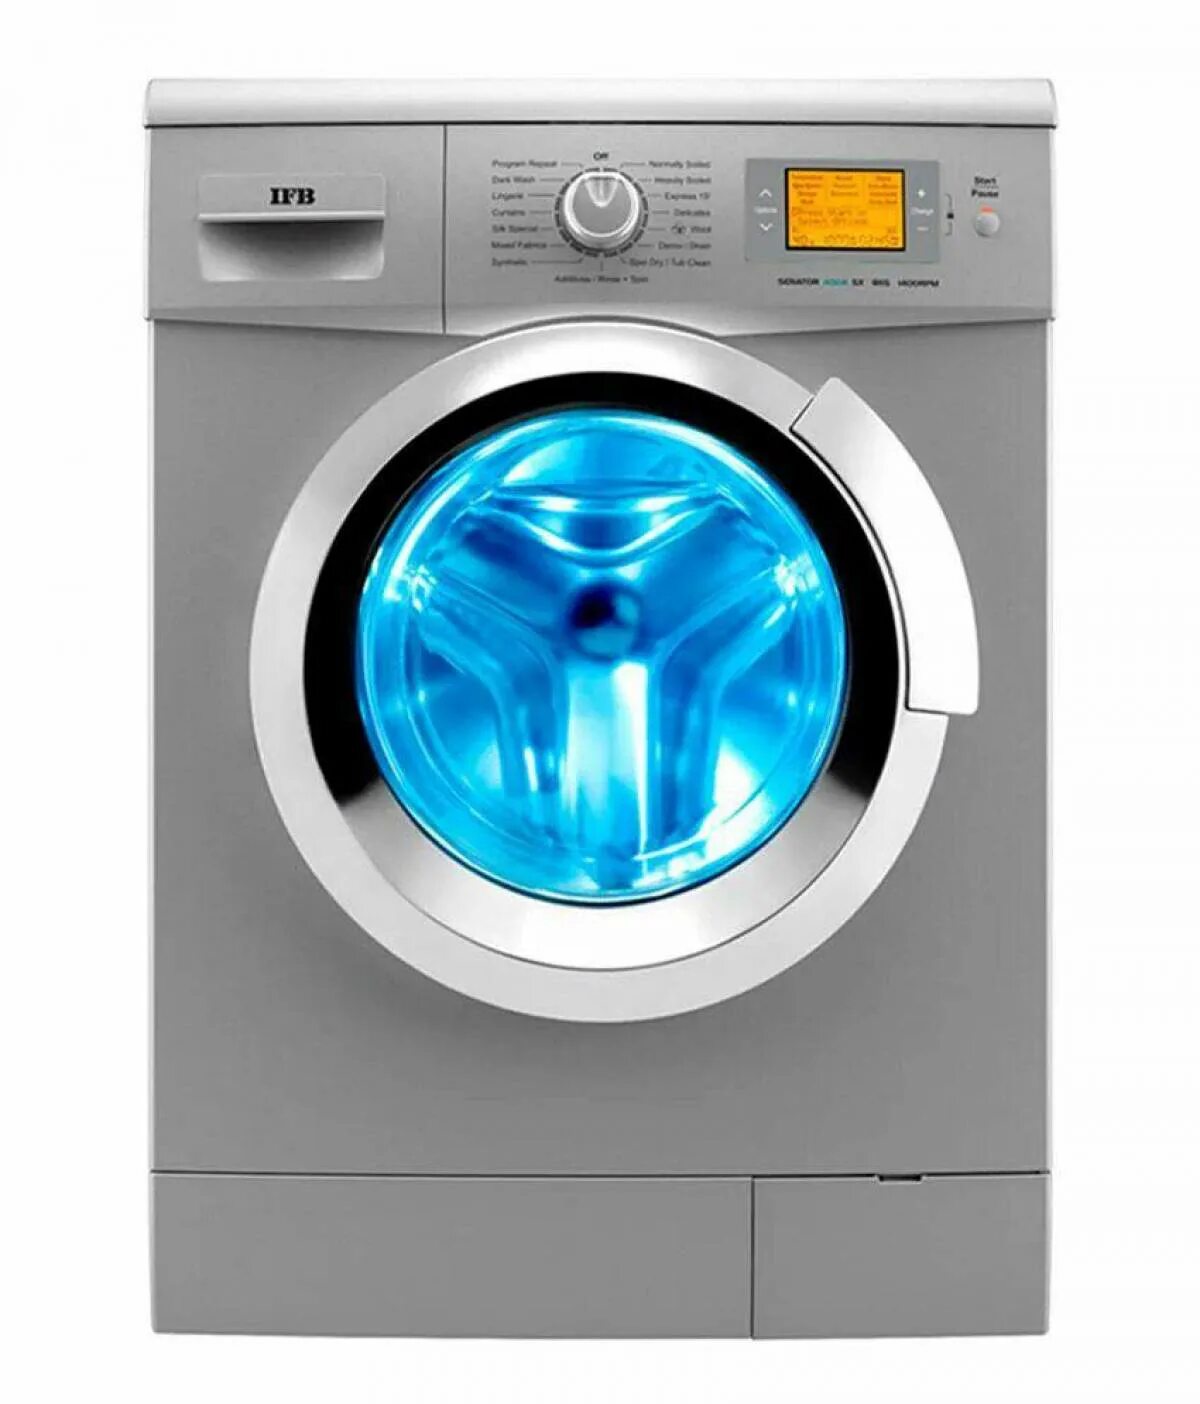 Стиральная машина Automatic washing Machine. Самсунг Wash Master стиральная машина. Стиральная машина Haier hw50-1010. Samsung стиральная машина 2022.